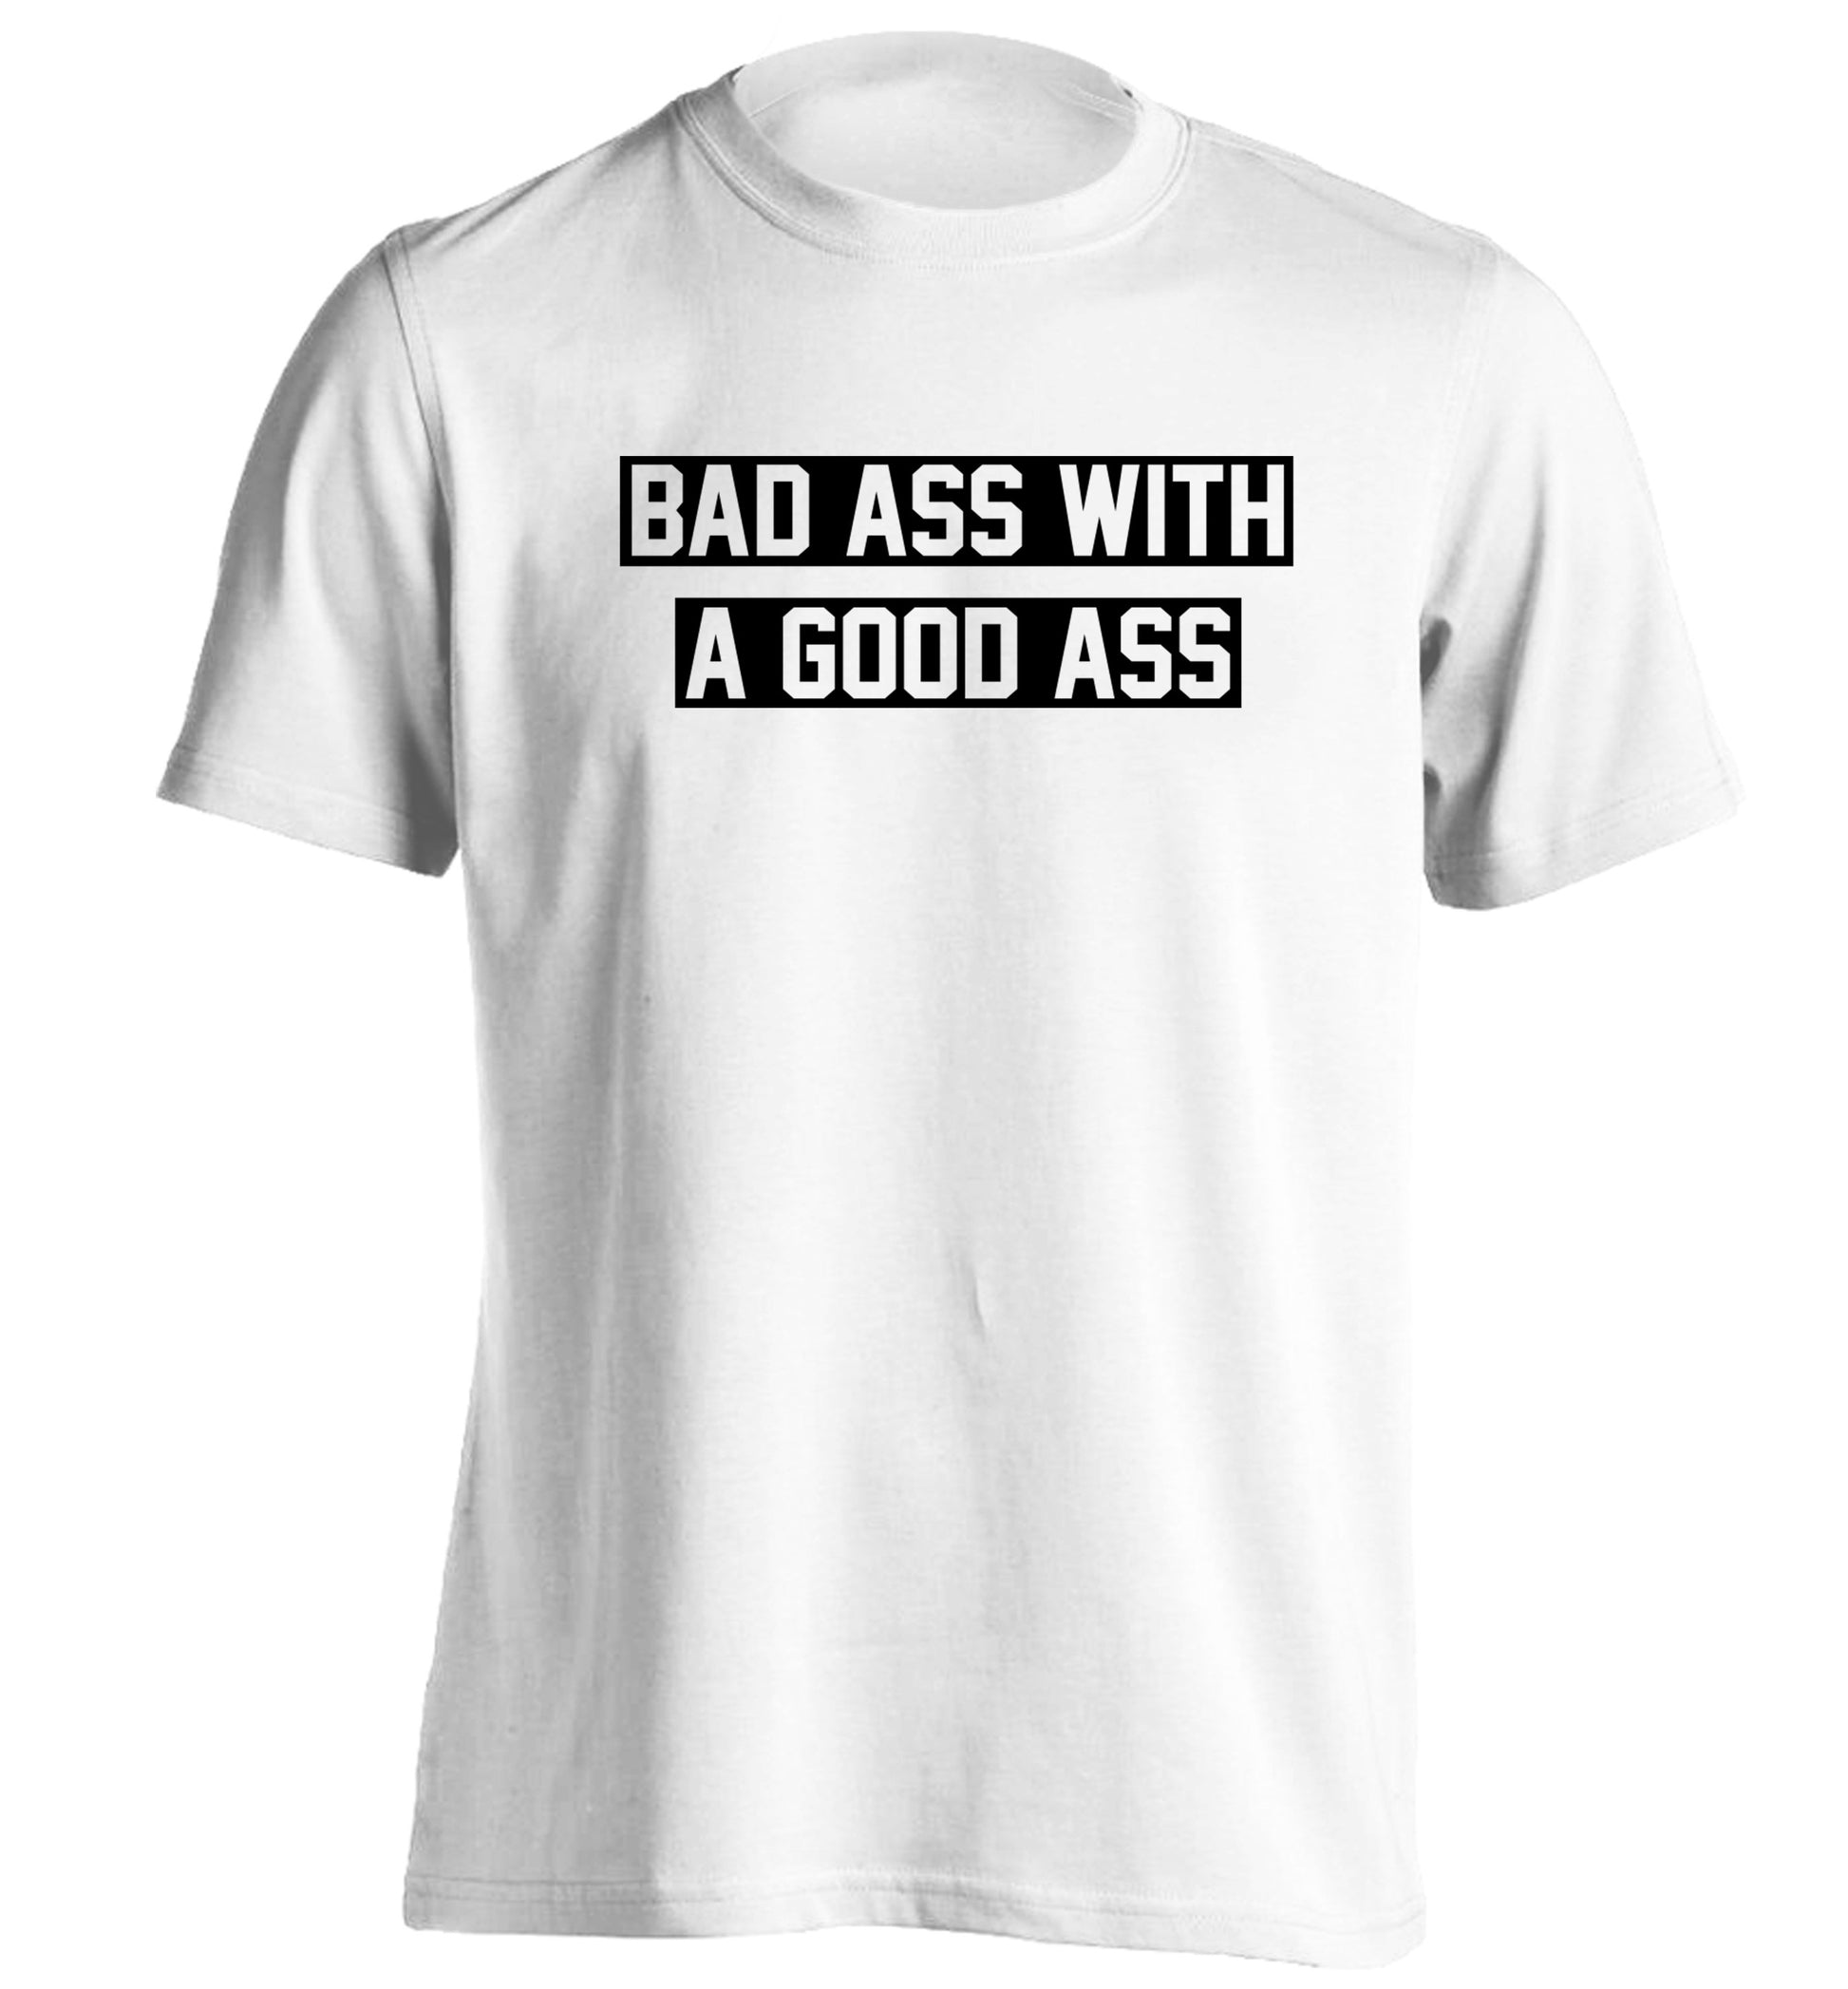 A bad ass with a good ass adults unisex white Tshirt 2XL